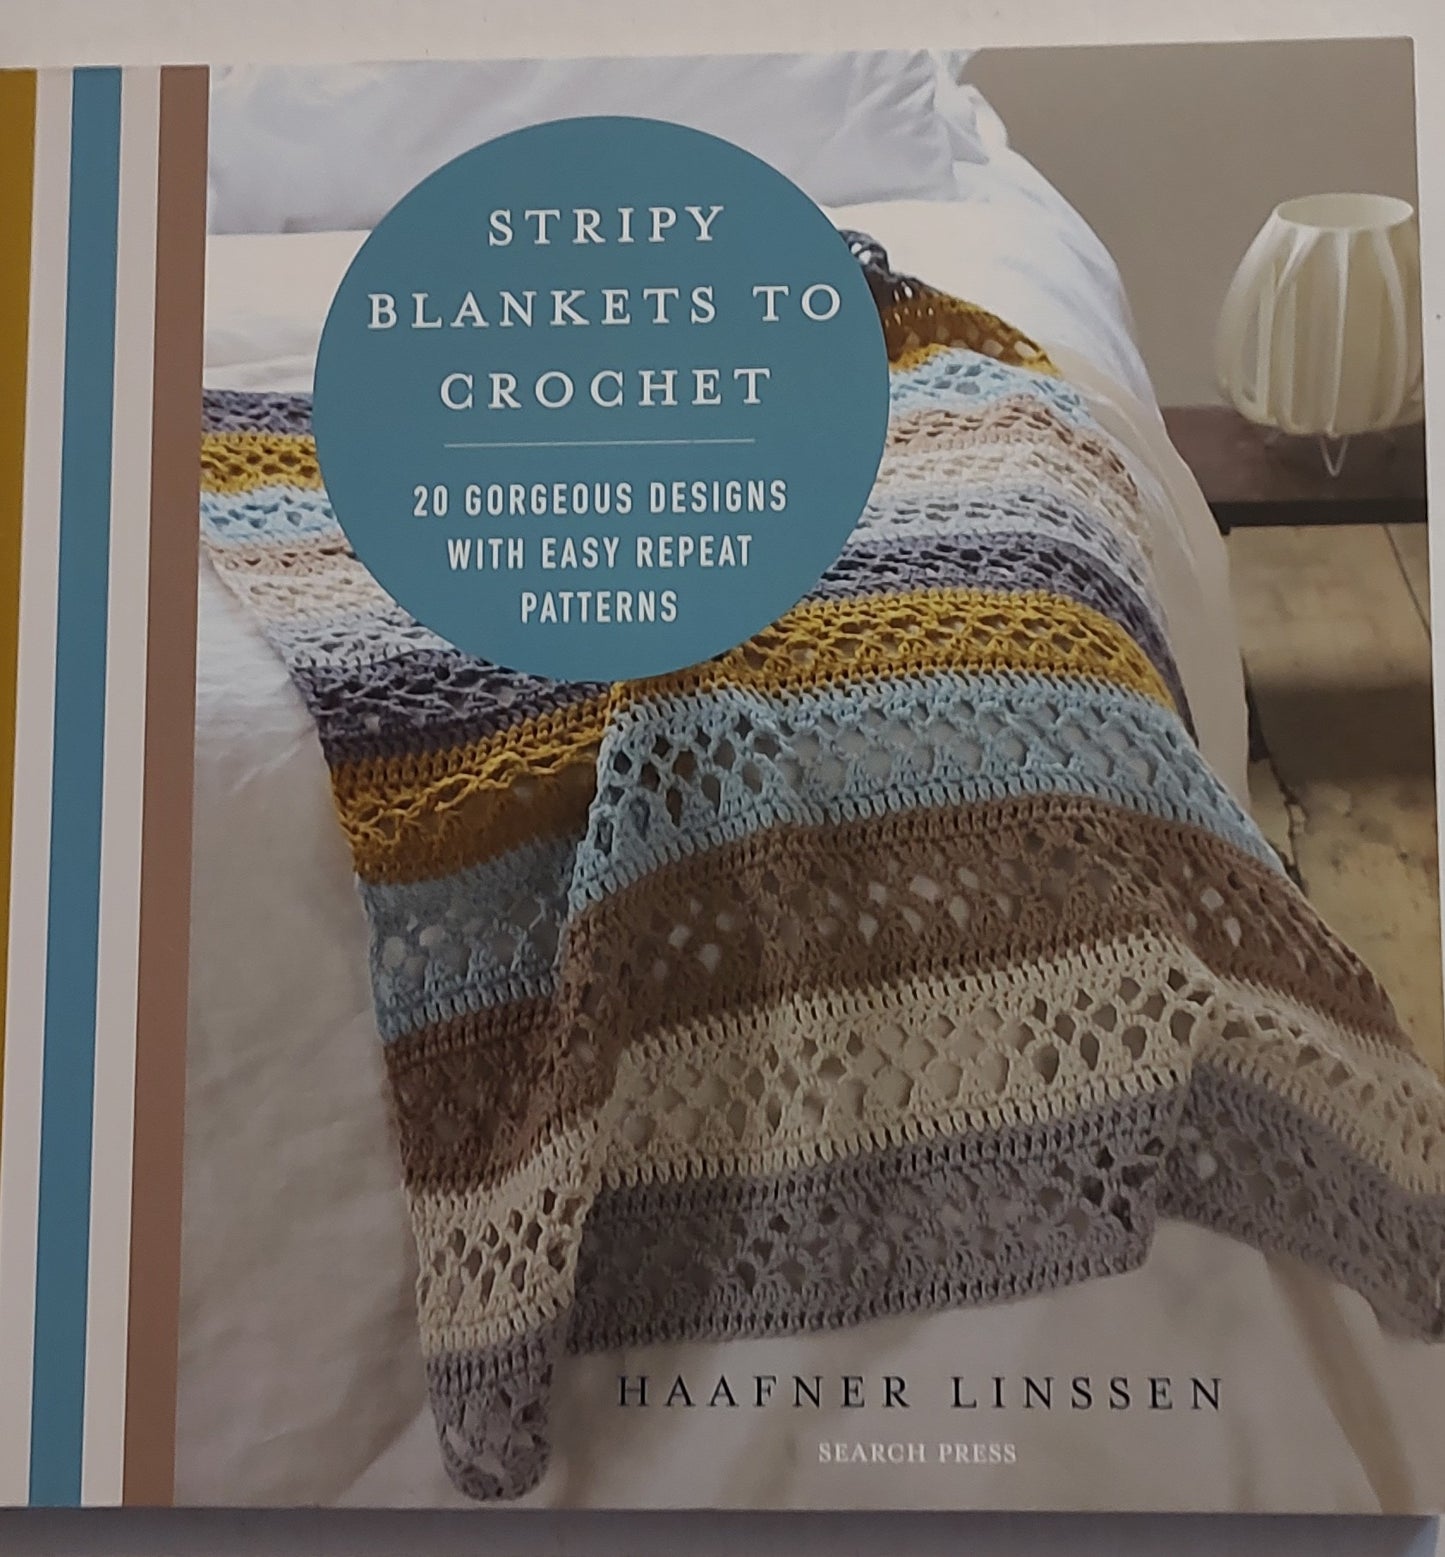 Book - Stripy Blankets to Crochet